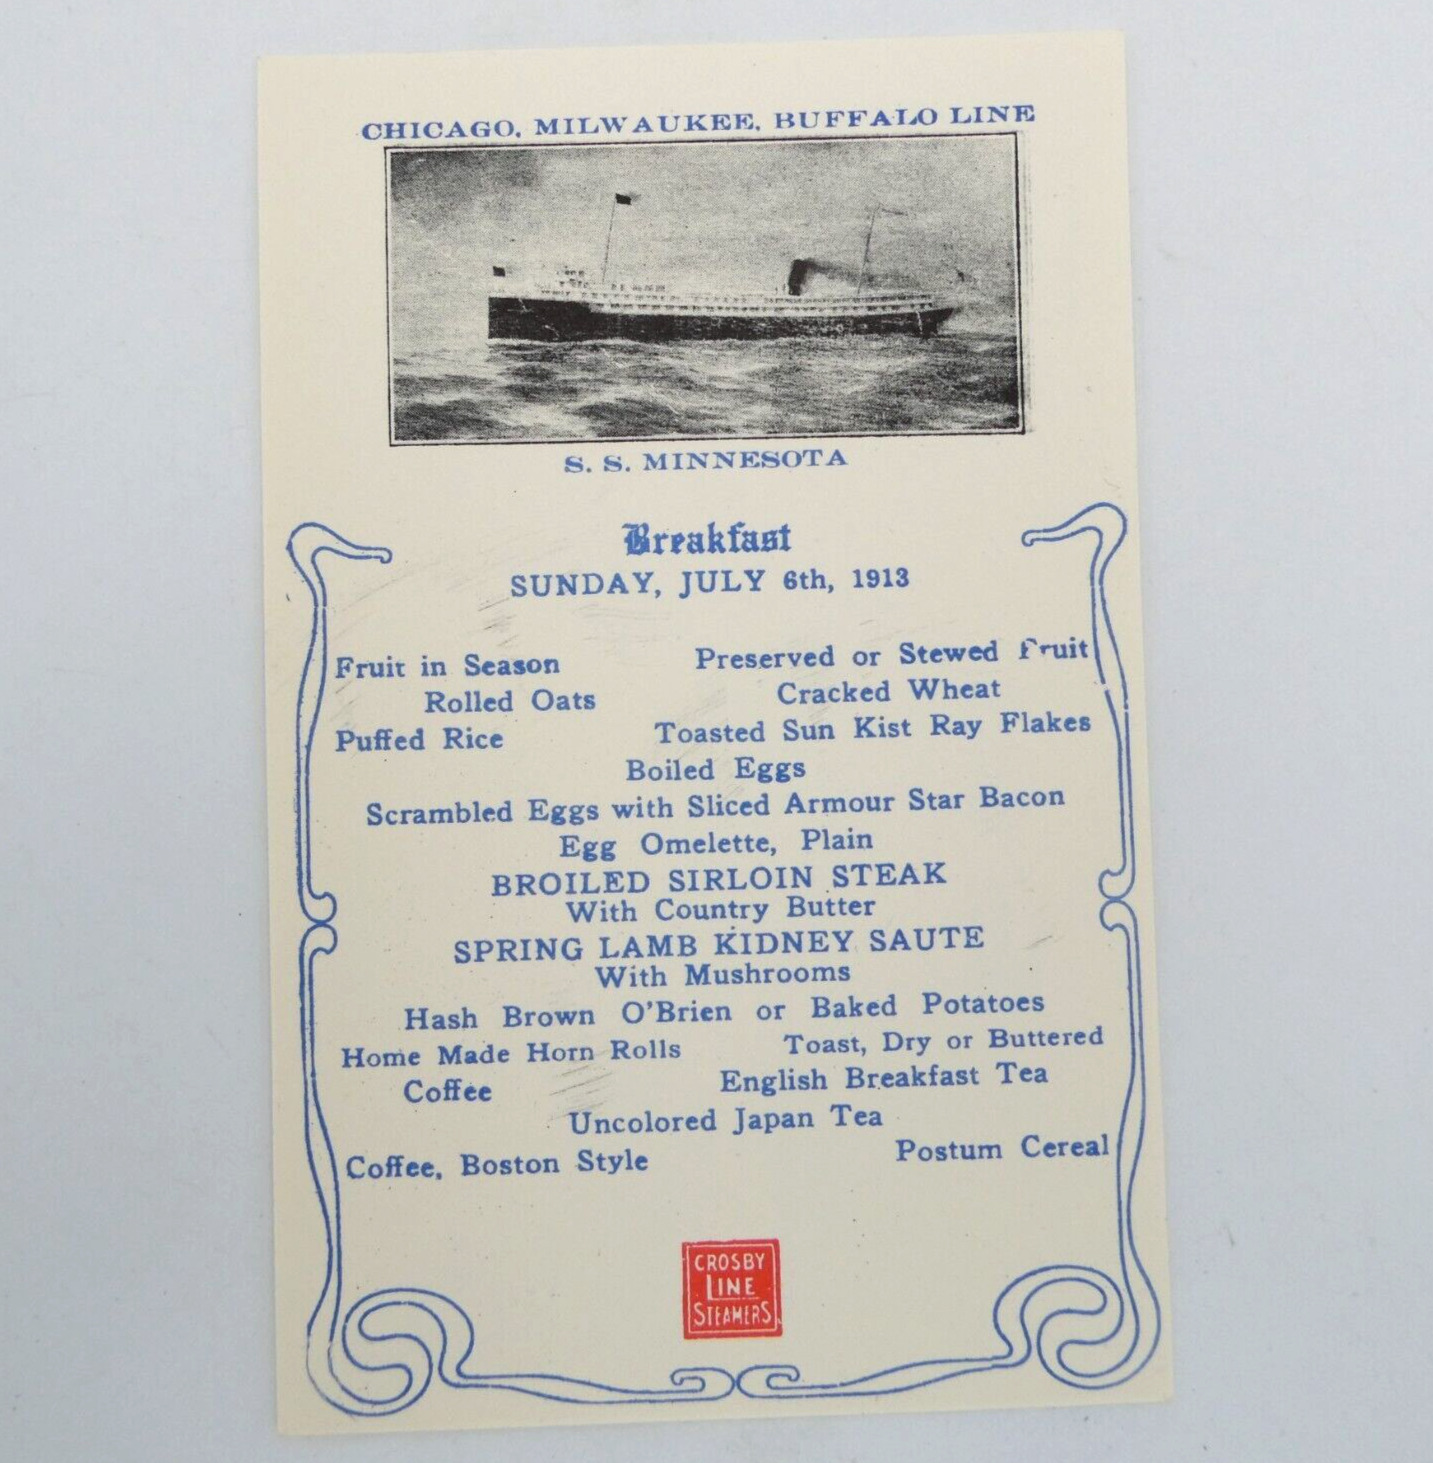 SS Minnesota Crosby Line Steamers Chicago-Milwalkee-Buffalo Menu PC 1913 Unsent